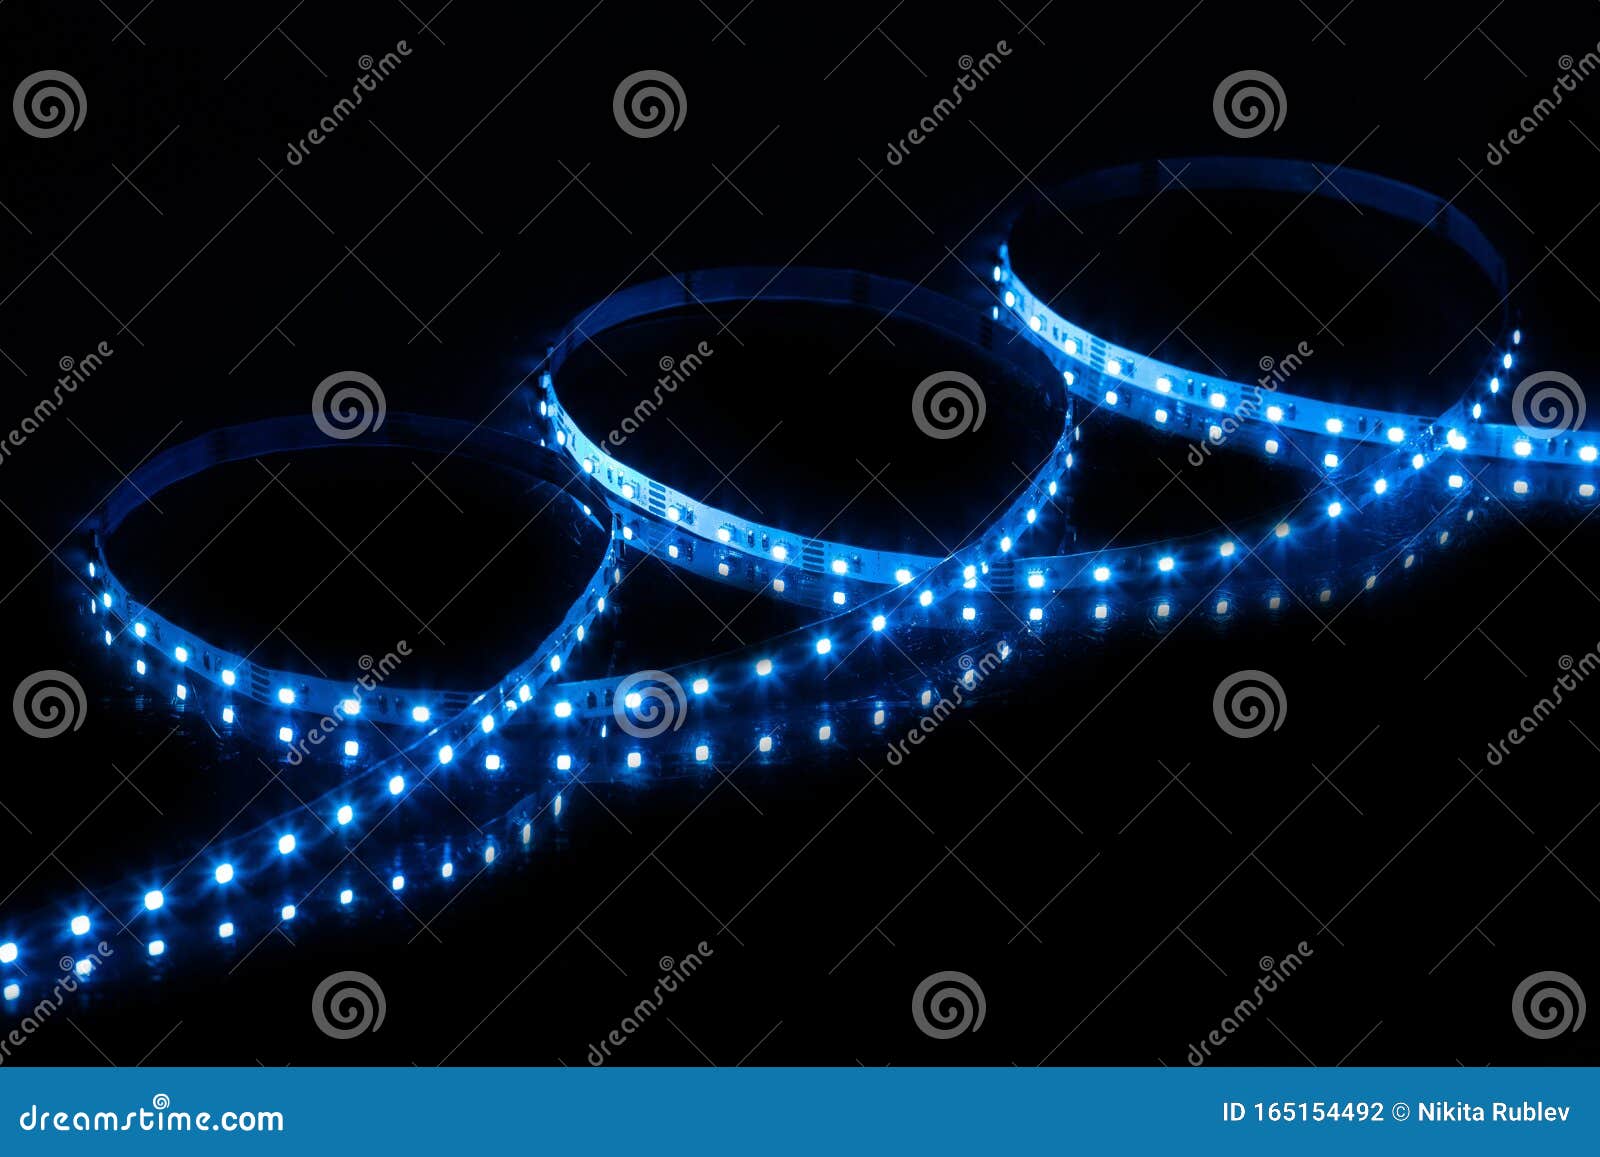 Blue Led Strip Tape On Black Background Stock Photo Image Of